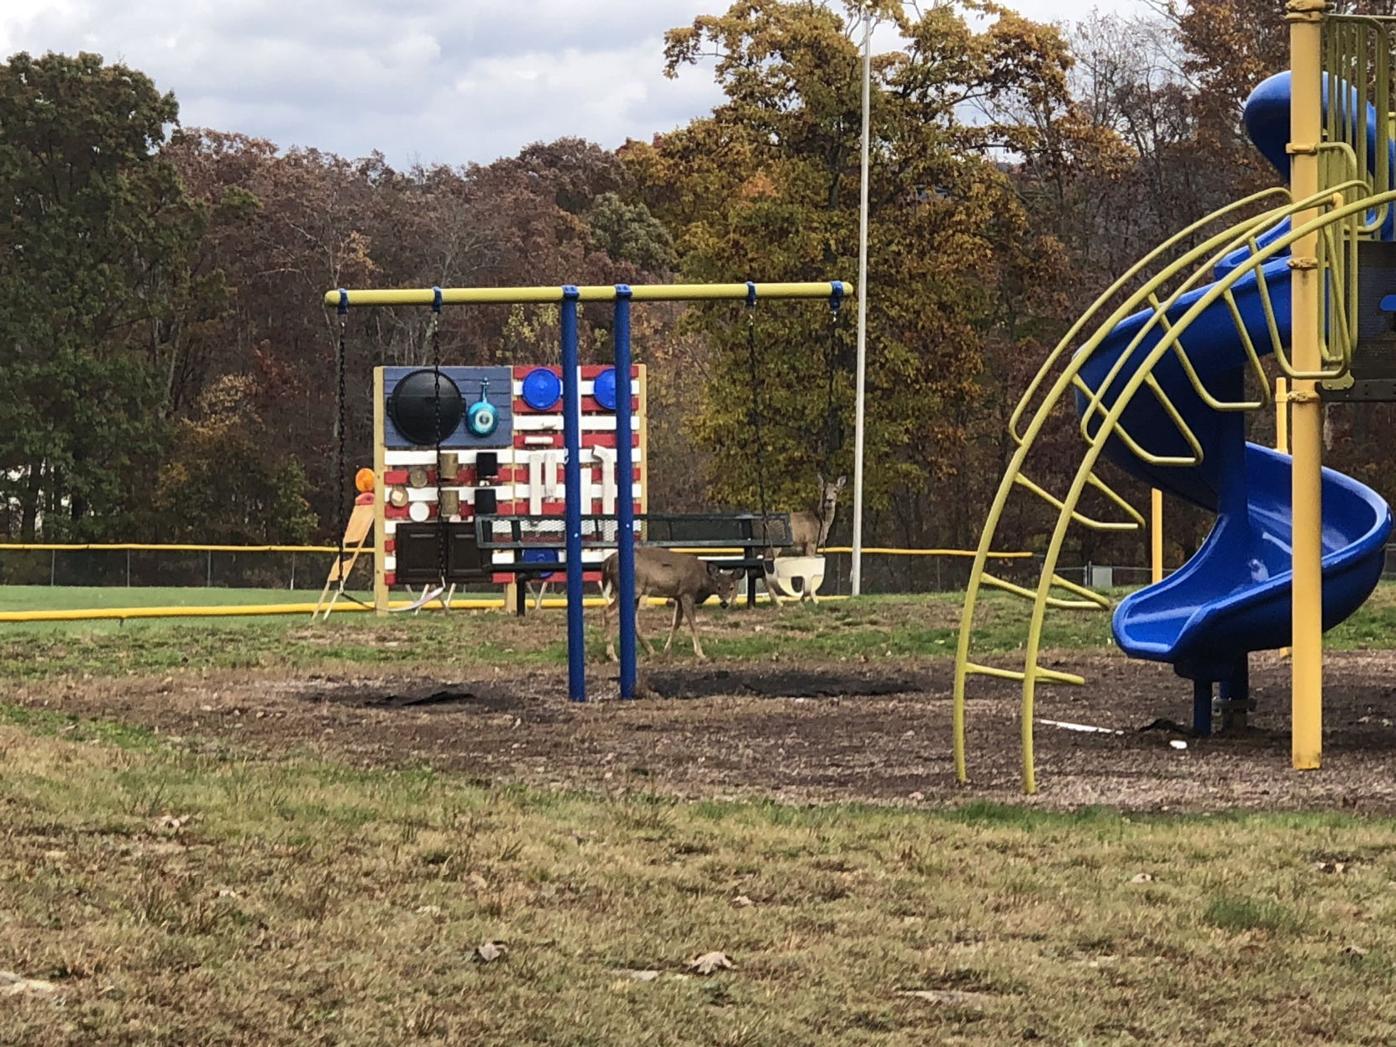 Deer, not antelope, play at Butler Township Community Park